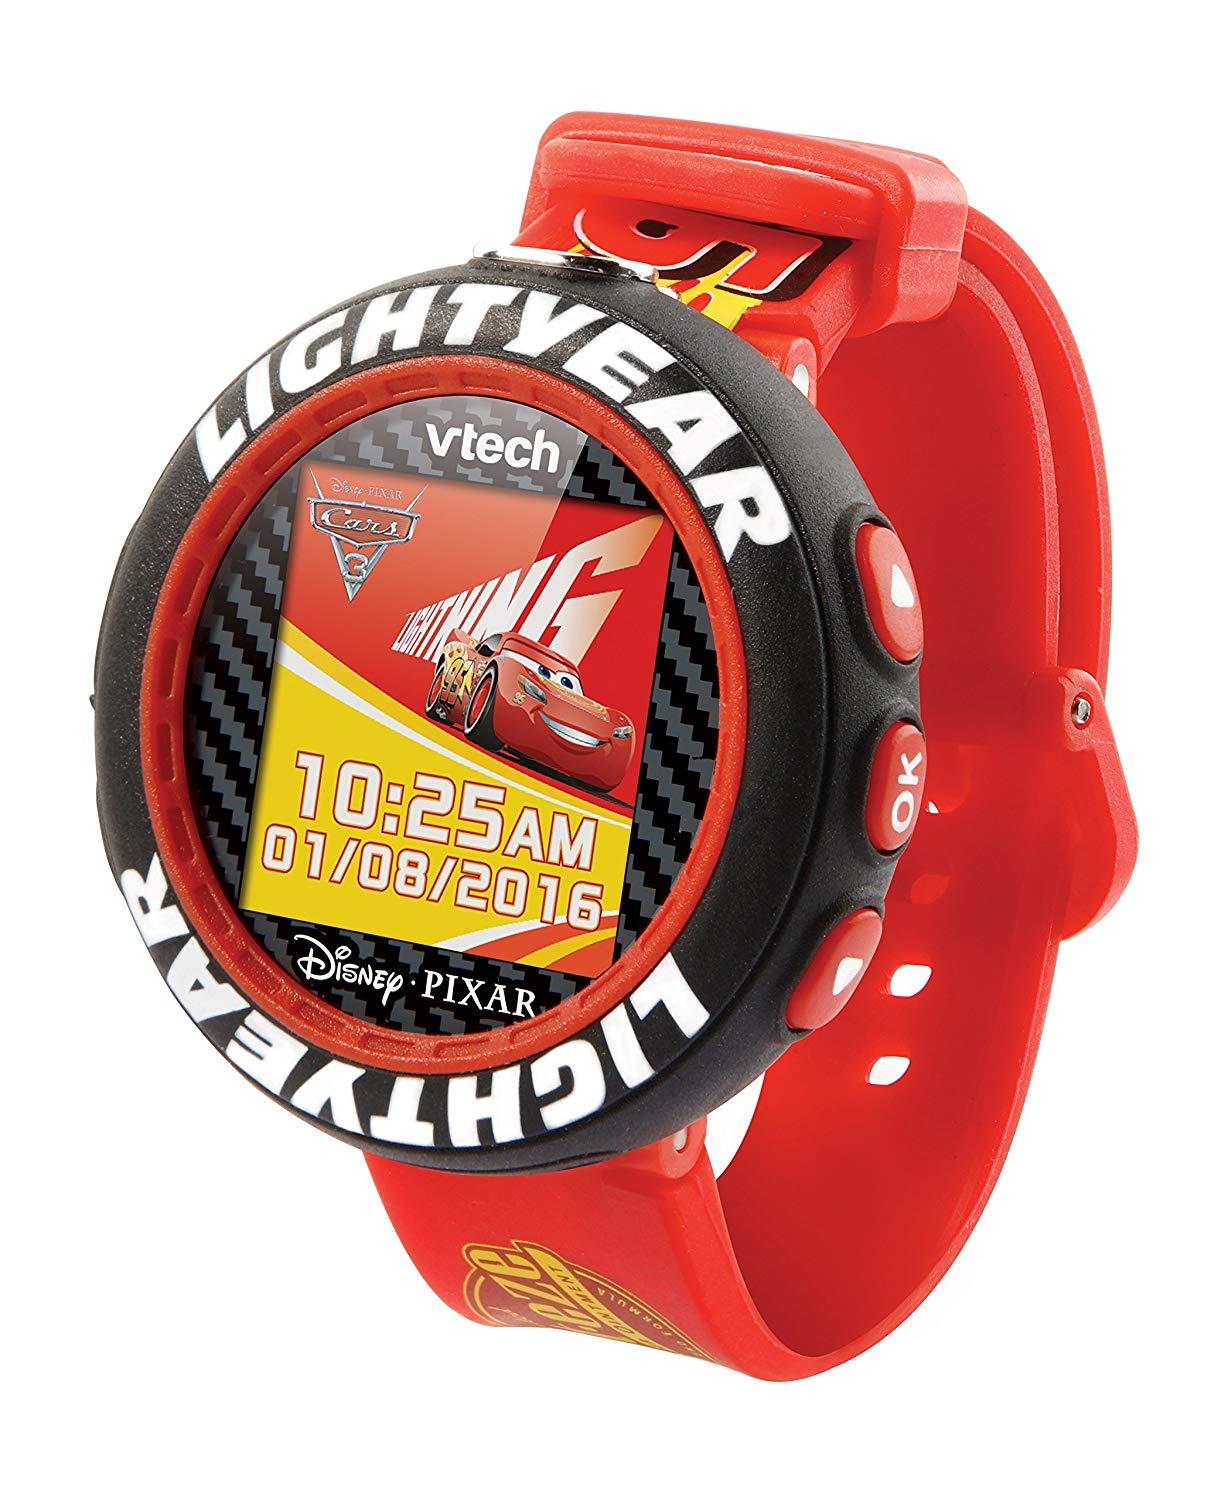 Red VTech Logo - VTech 507203 Lightning Mcqueen Camera Watch: Amazon.co.uk: Toys & Games